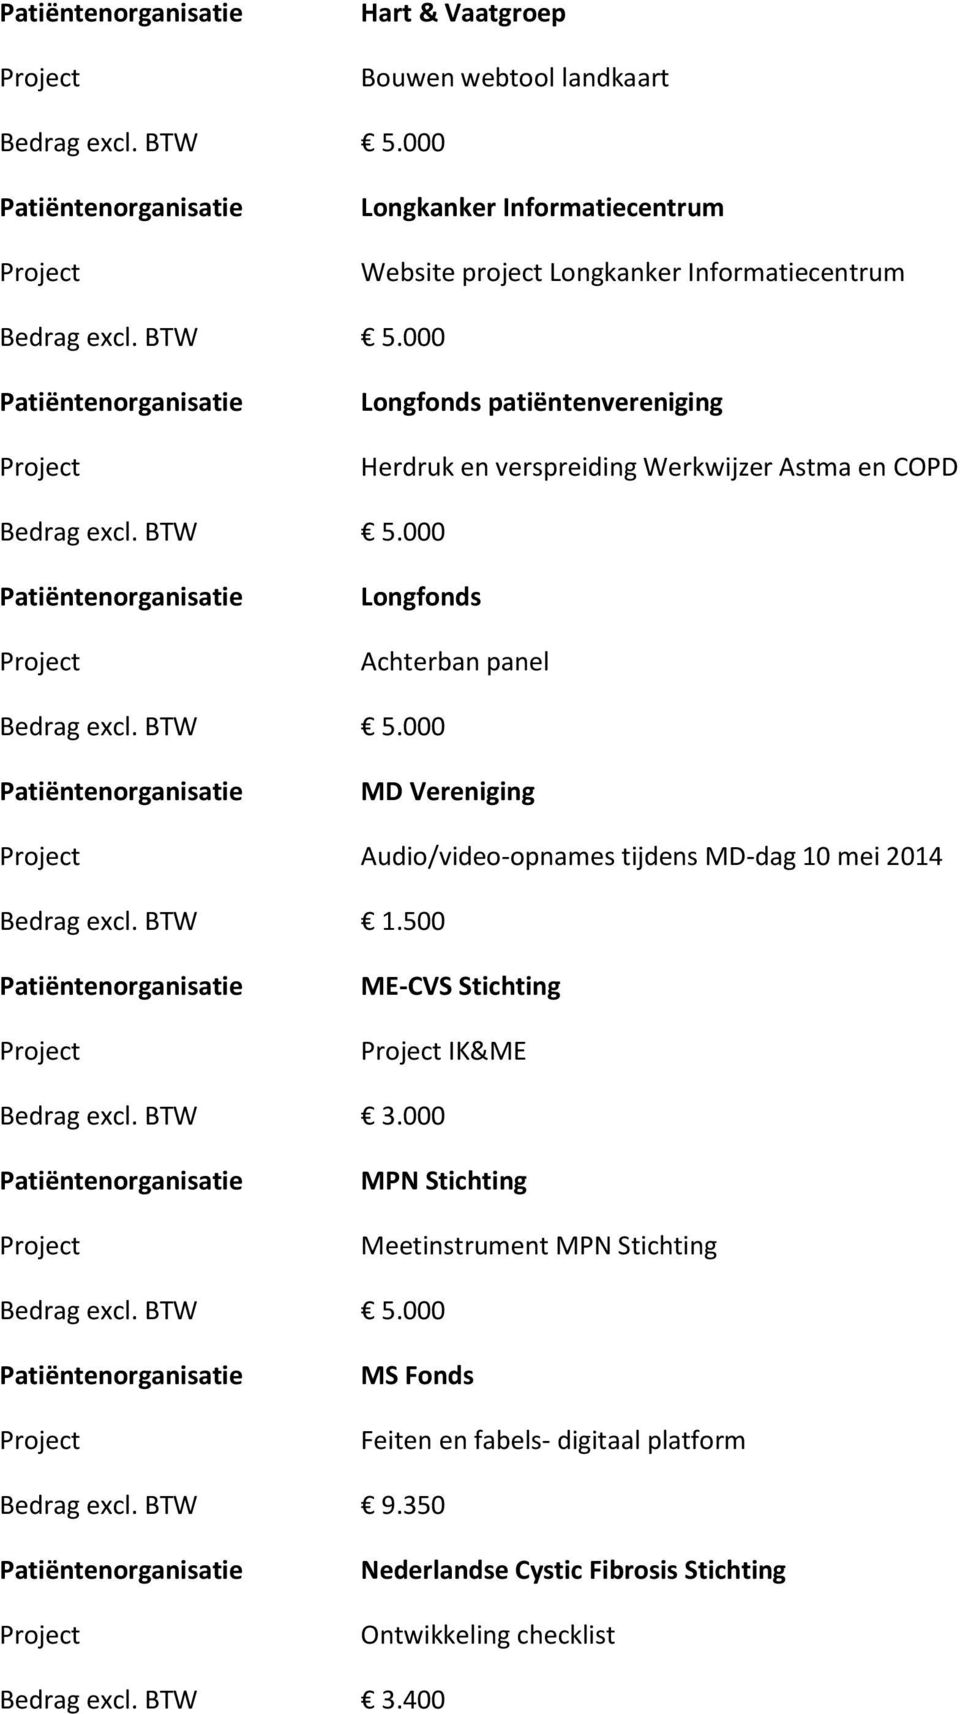 Audio/video-opnames tijdens MD-dag 10 mei 2014 ME-CVS Stichting IK&ME MPN Stichting Meetinstrument MPN Stichting MS Fonds